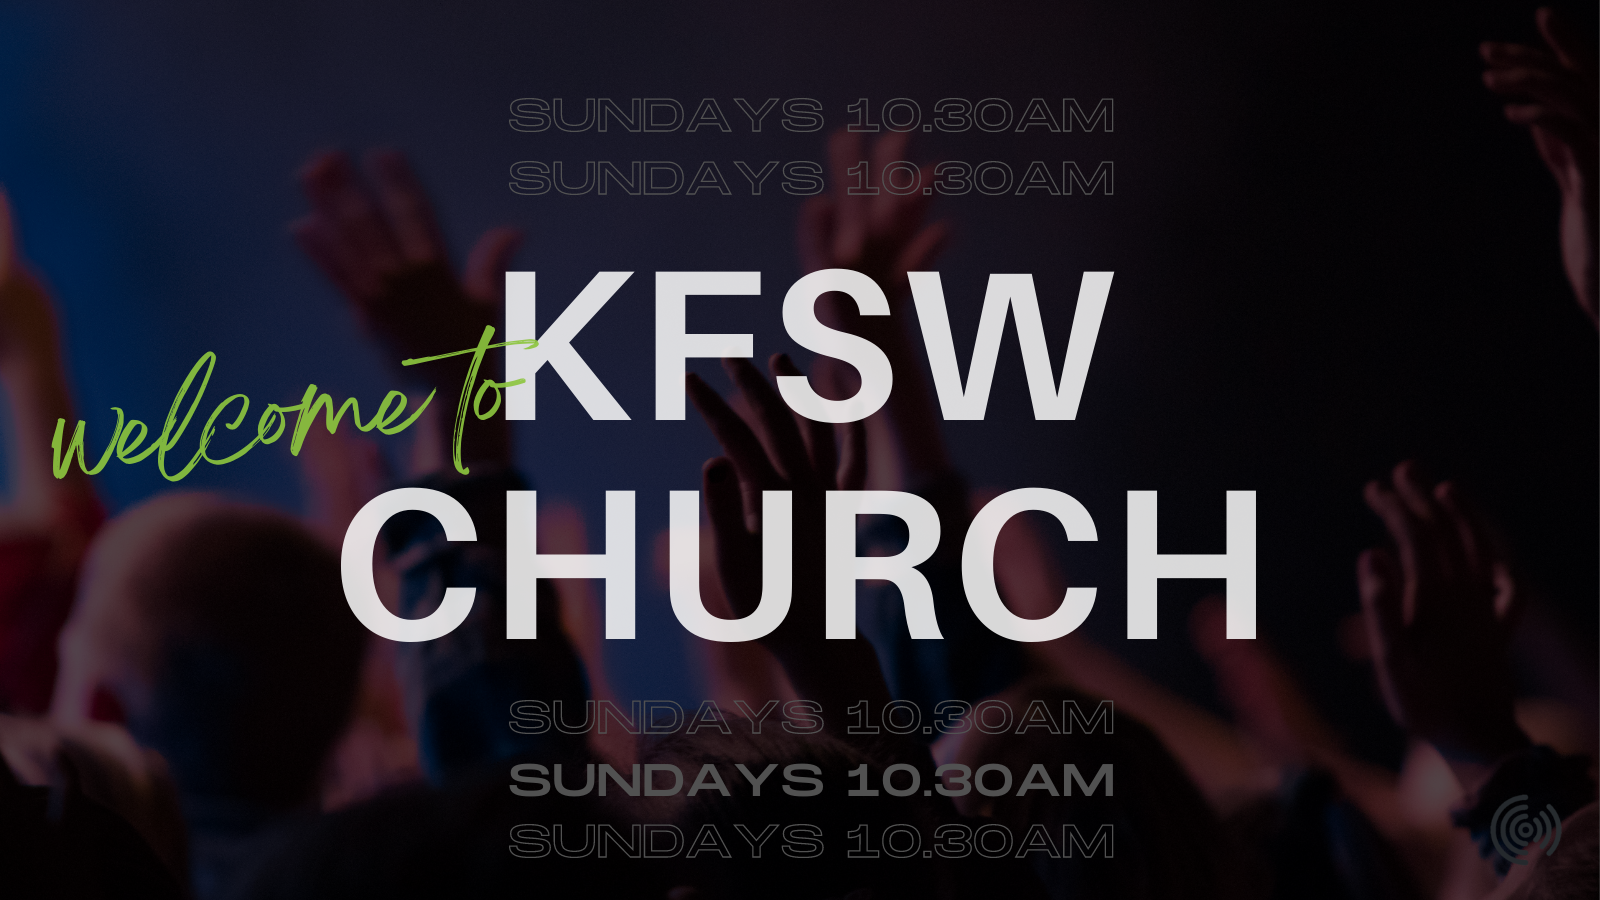 Sunday mornings @ KFSW Church